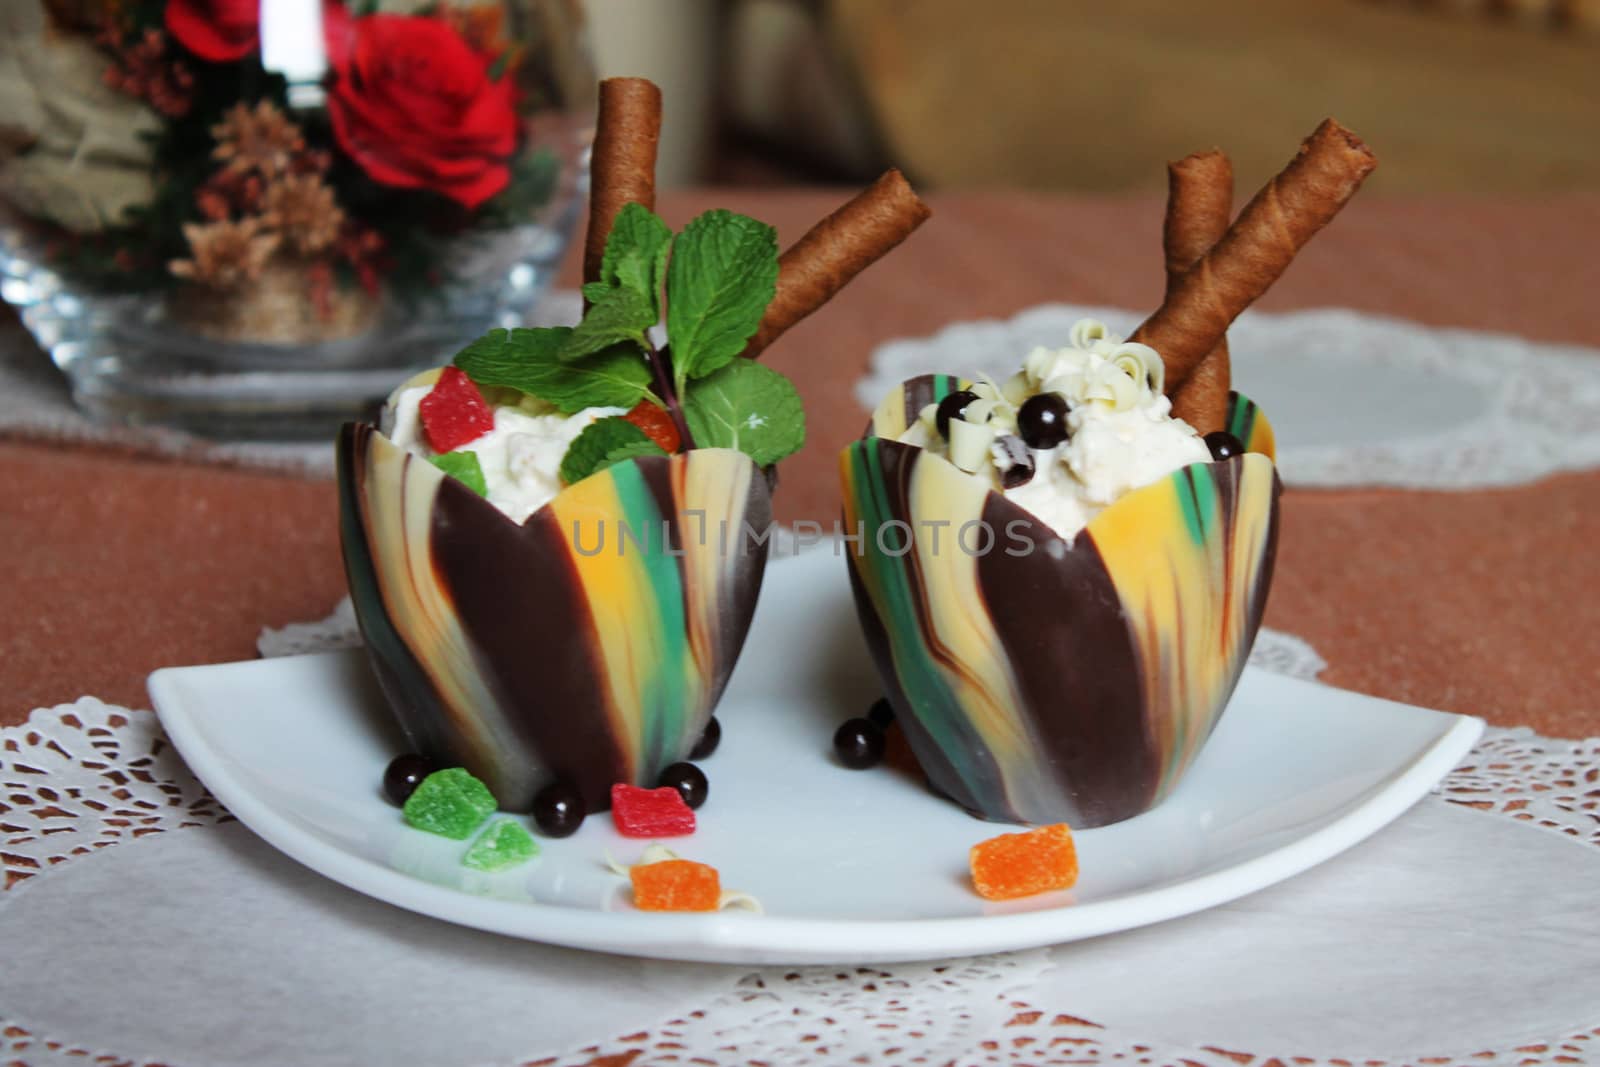 Chocolate dessert by LenoraA